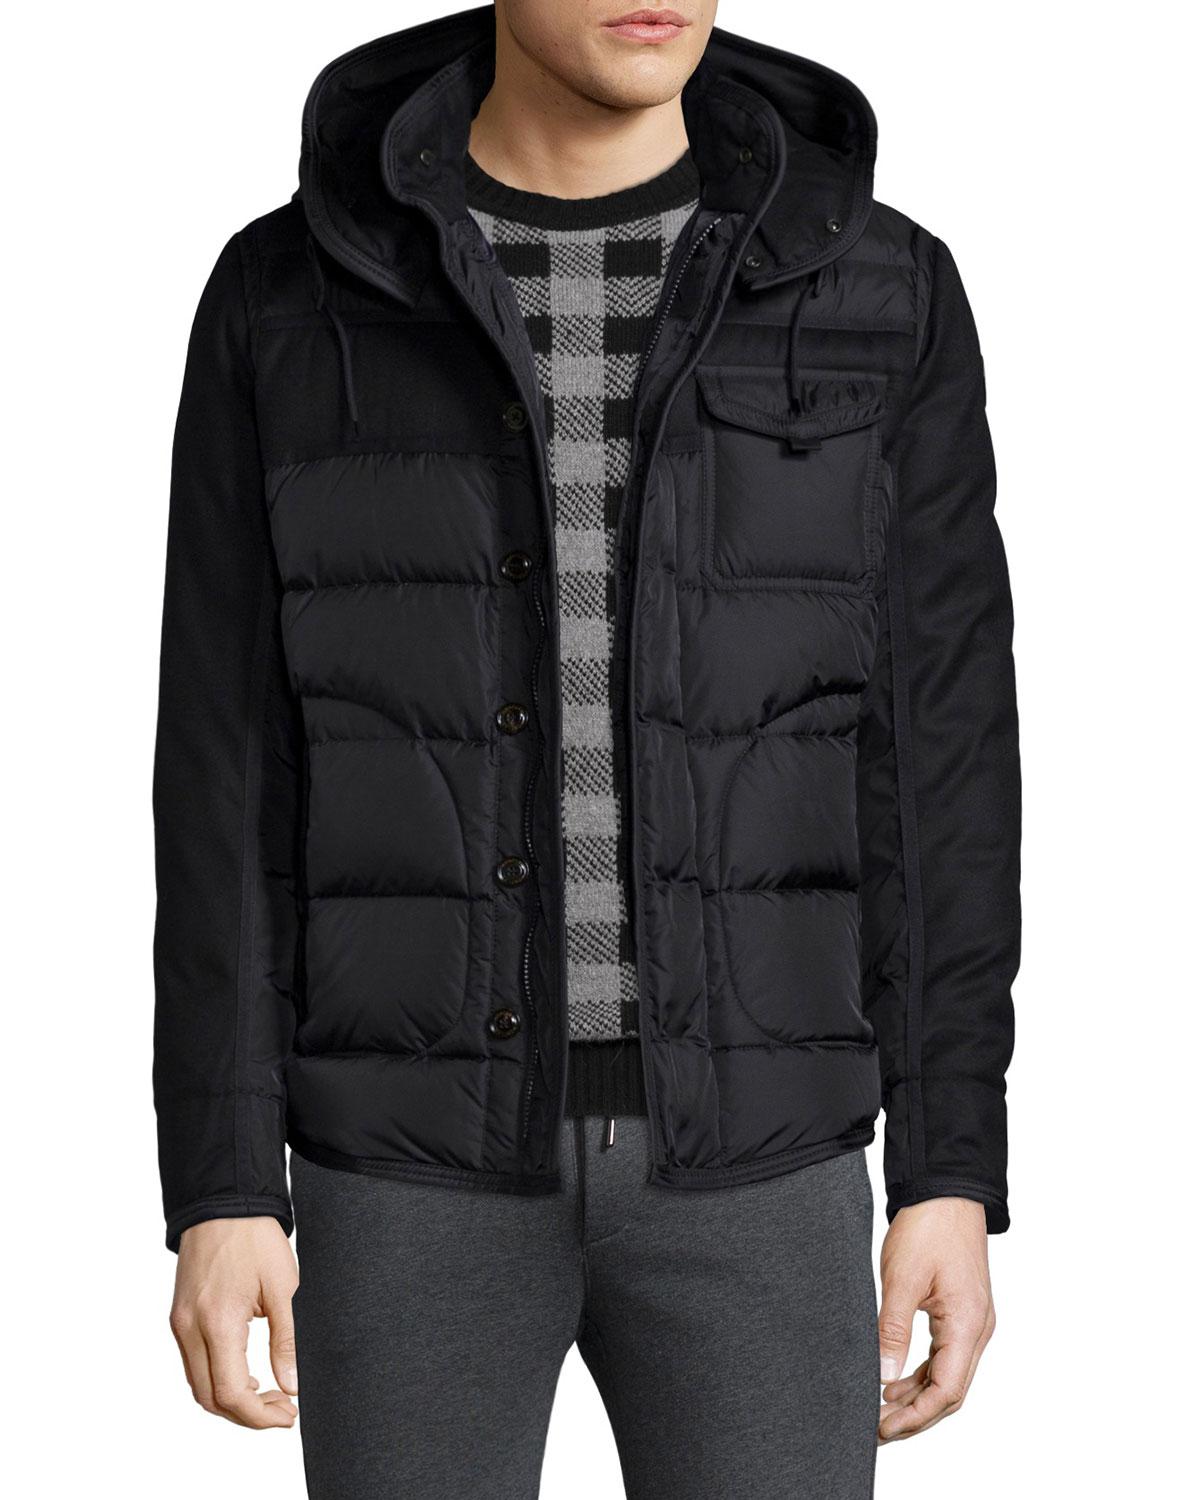 Lyst - Moncler Ryan Nylon & Wool Hooded Puffer Jacket in Black for Men ...